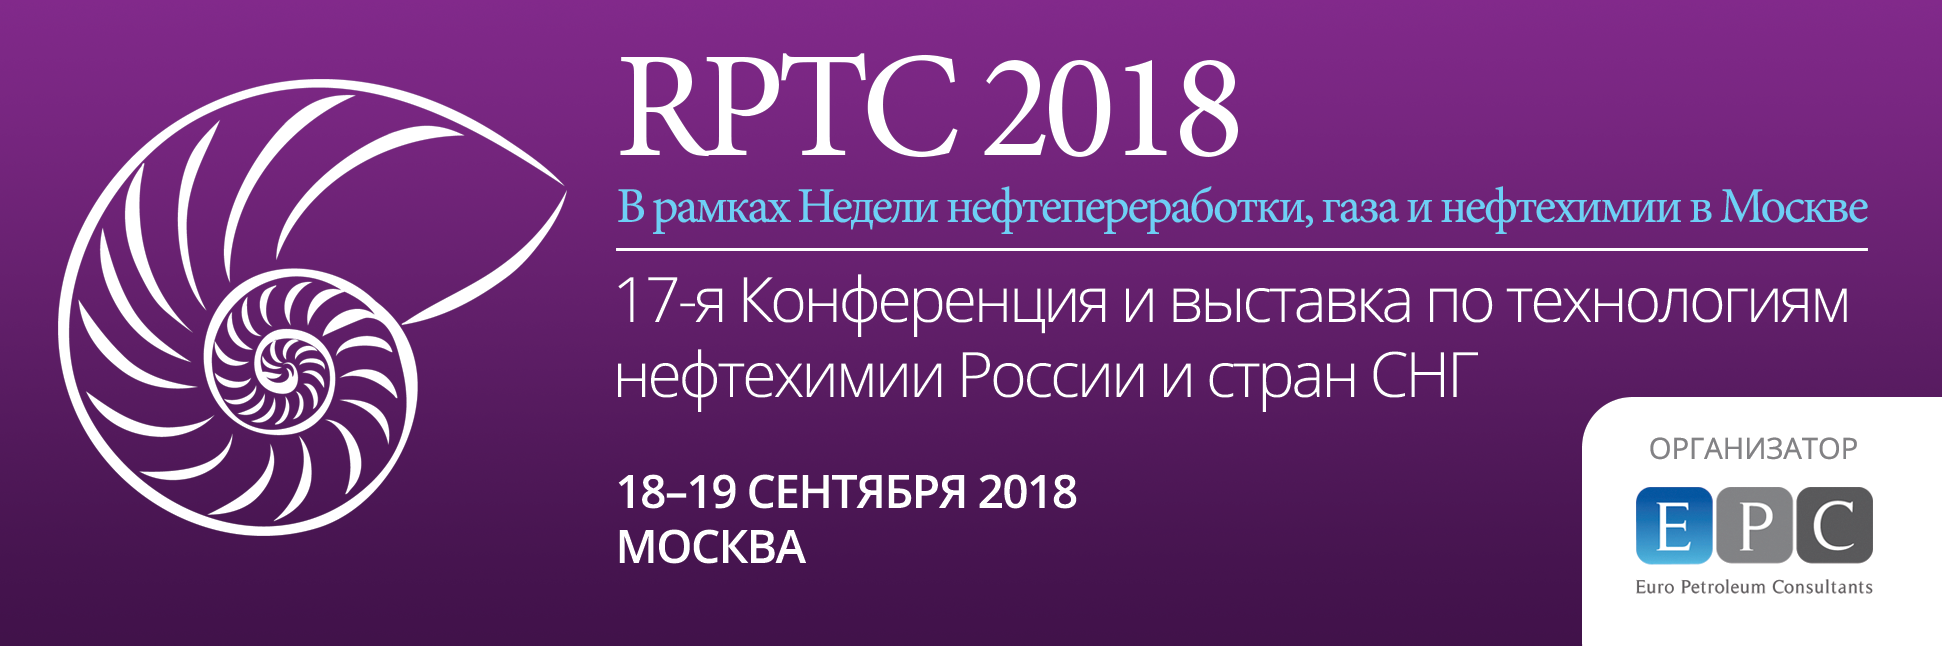 RPTC 2018